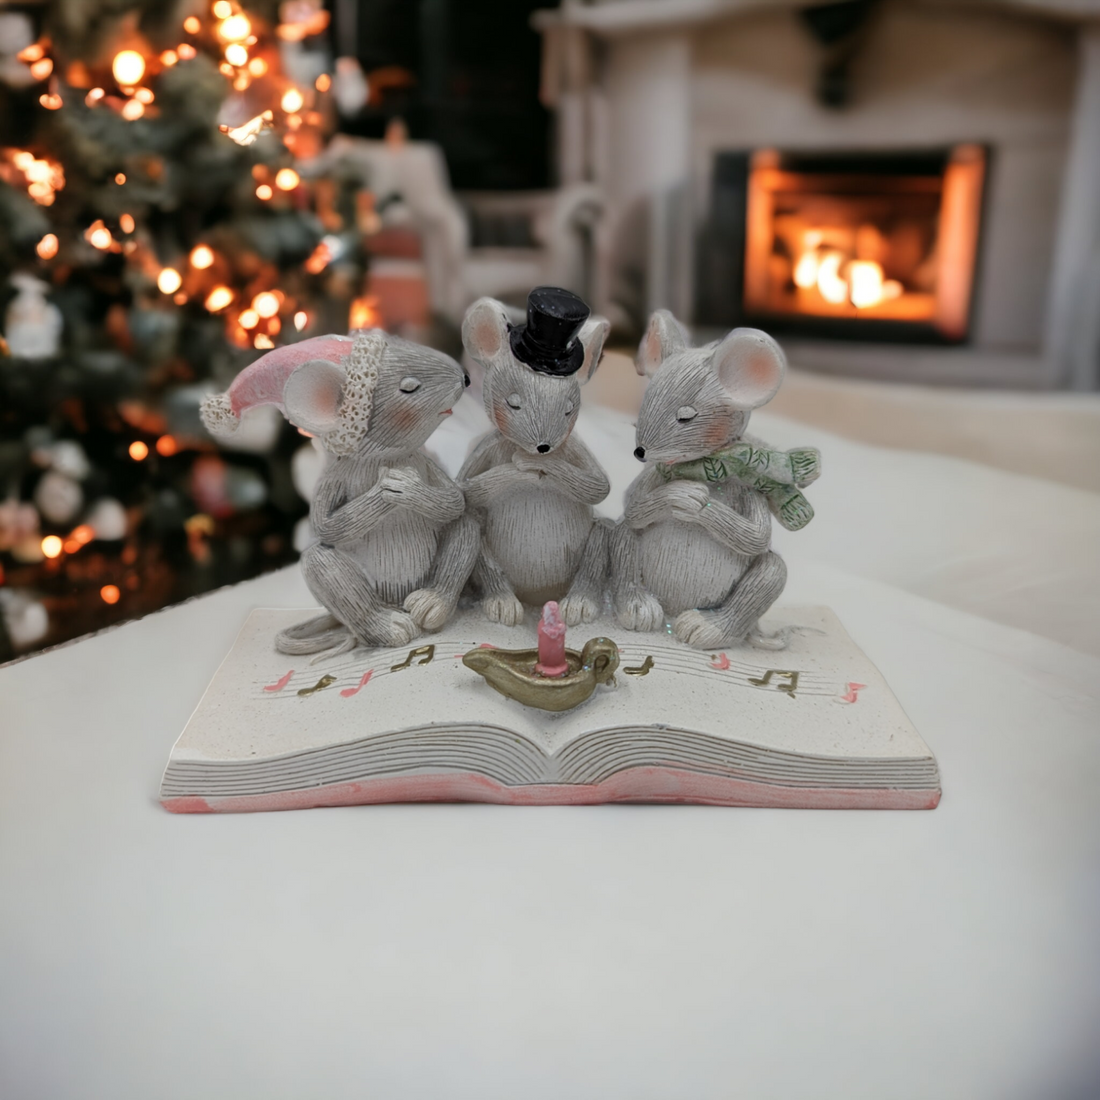 Caroling Mice on a Book